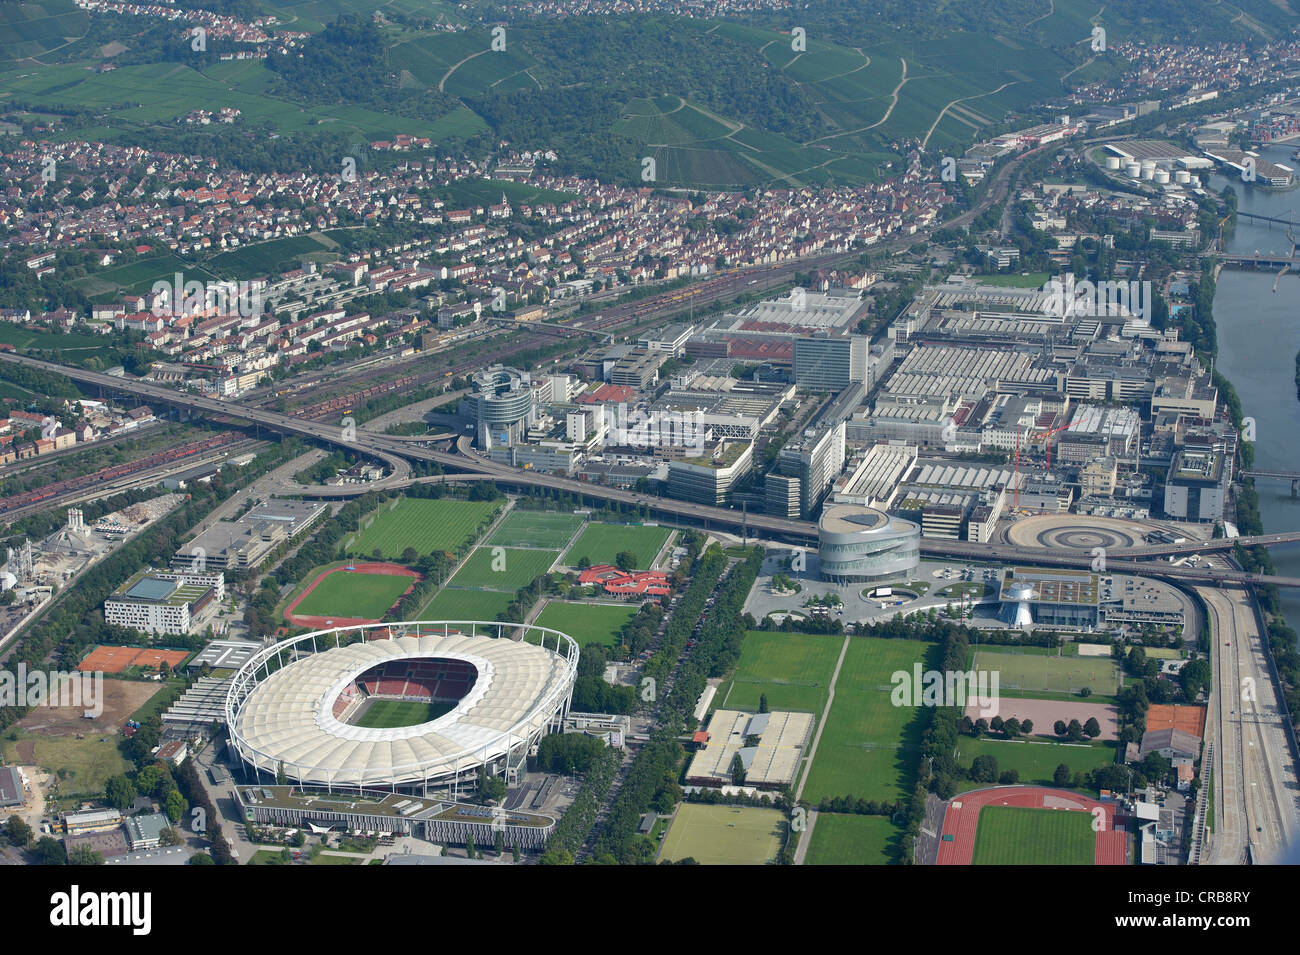 Aerial view, Neckarpark, VfB Stuttgart football stadium, Mercedes-Benz-Arena, Stuttgart, Baden-Wuerttemberg, Germany, Europe Stock Photo